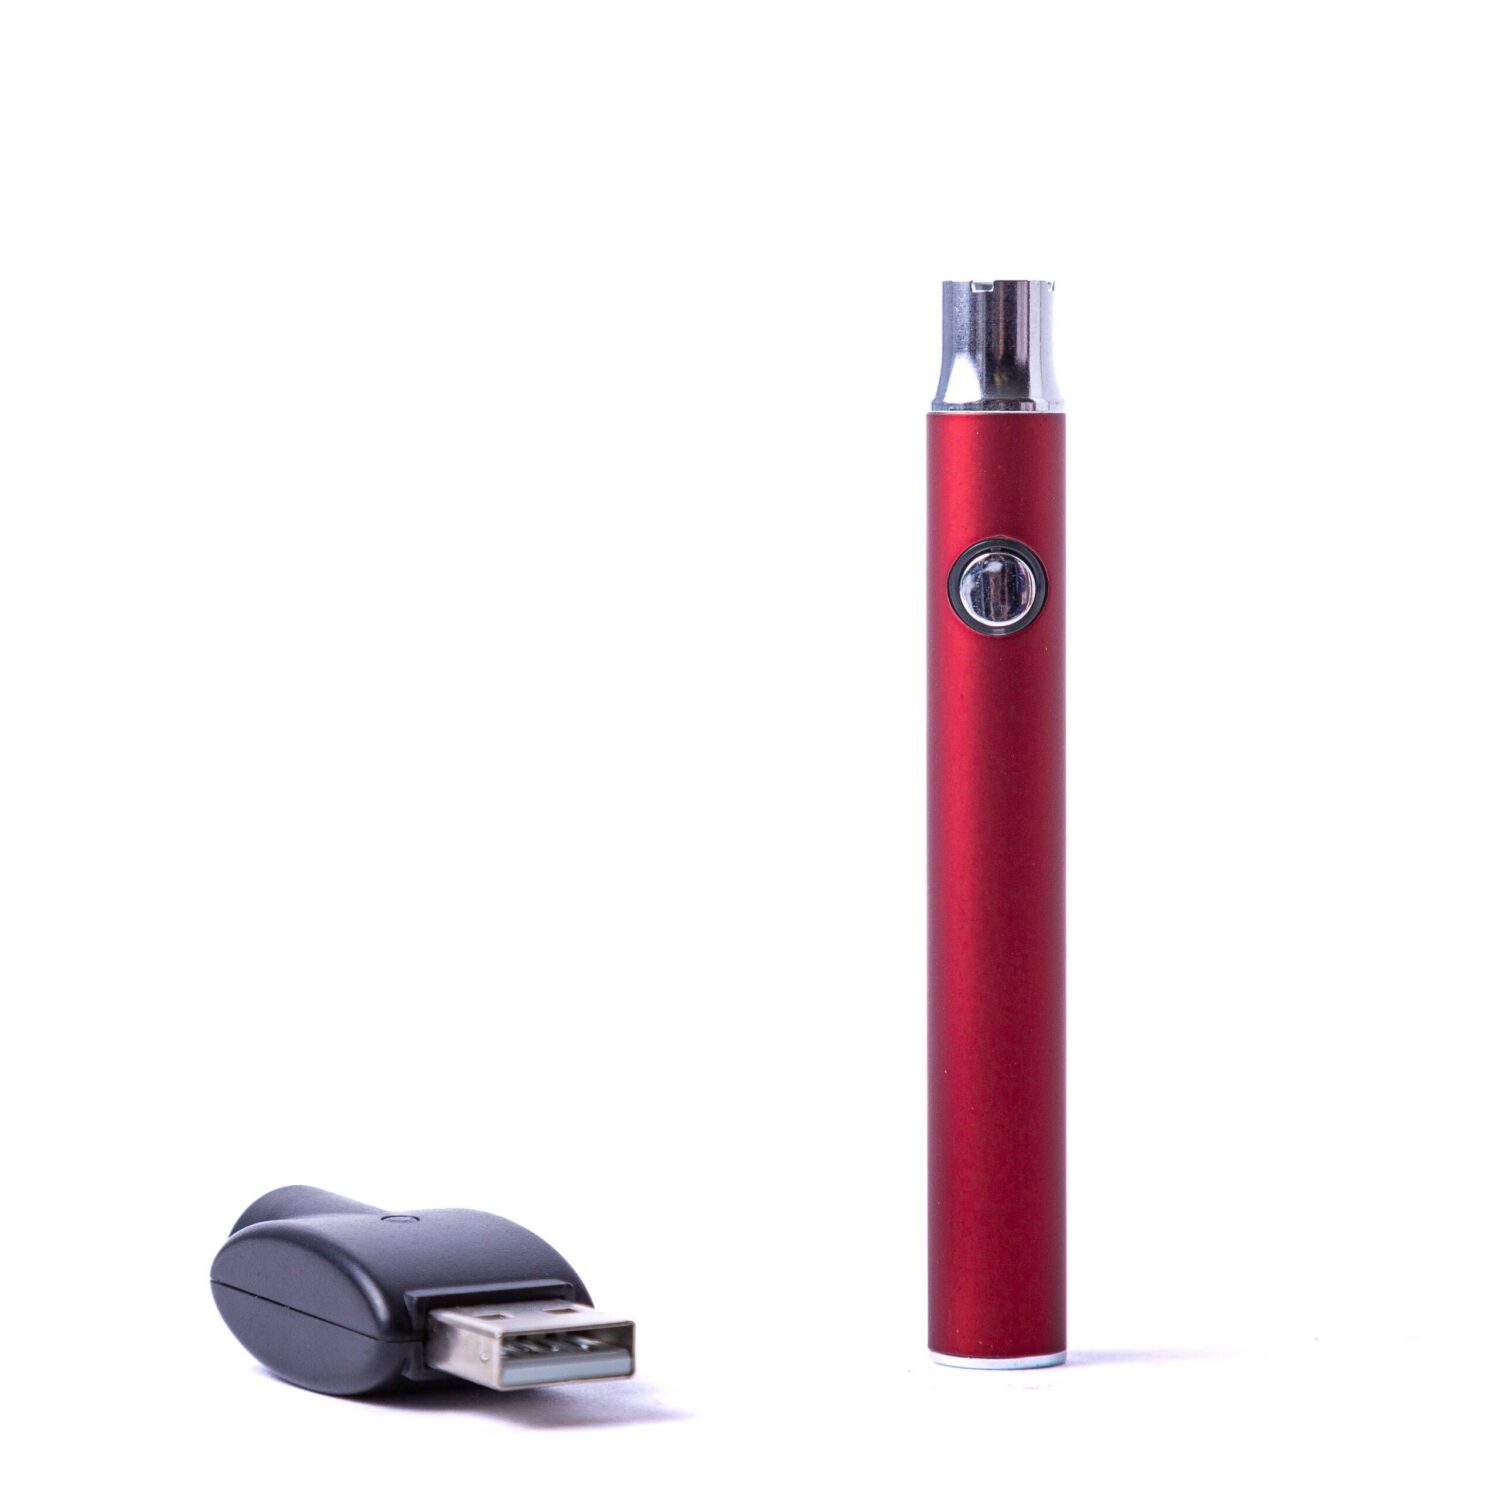 300 MAH Vape Battery - Red - Add Custom Printed Logo or Art